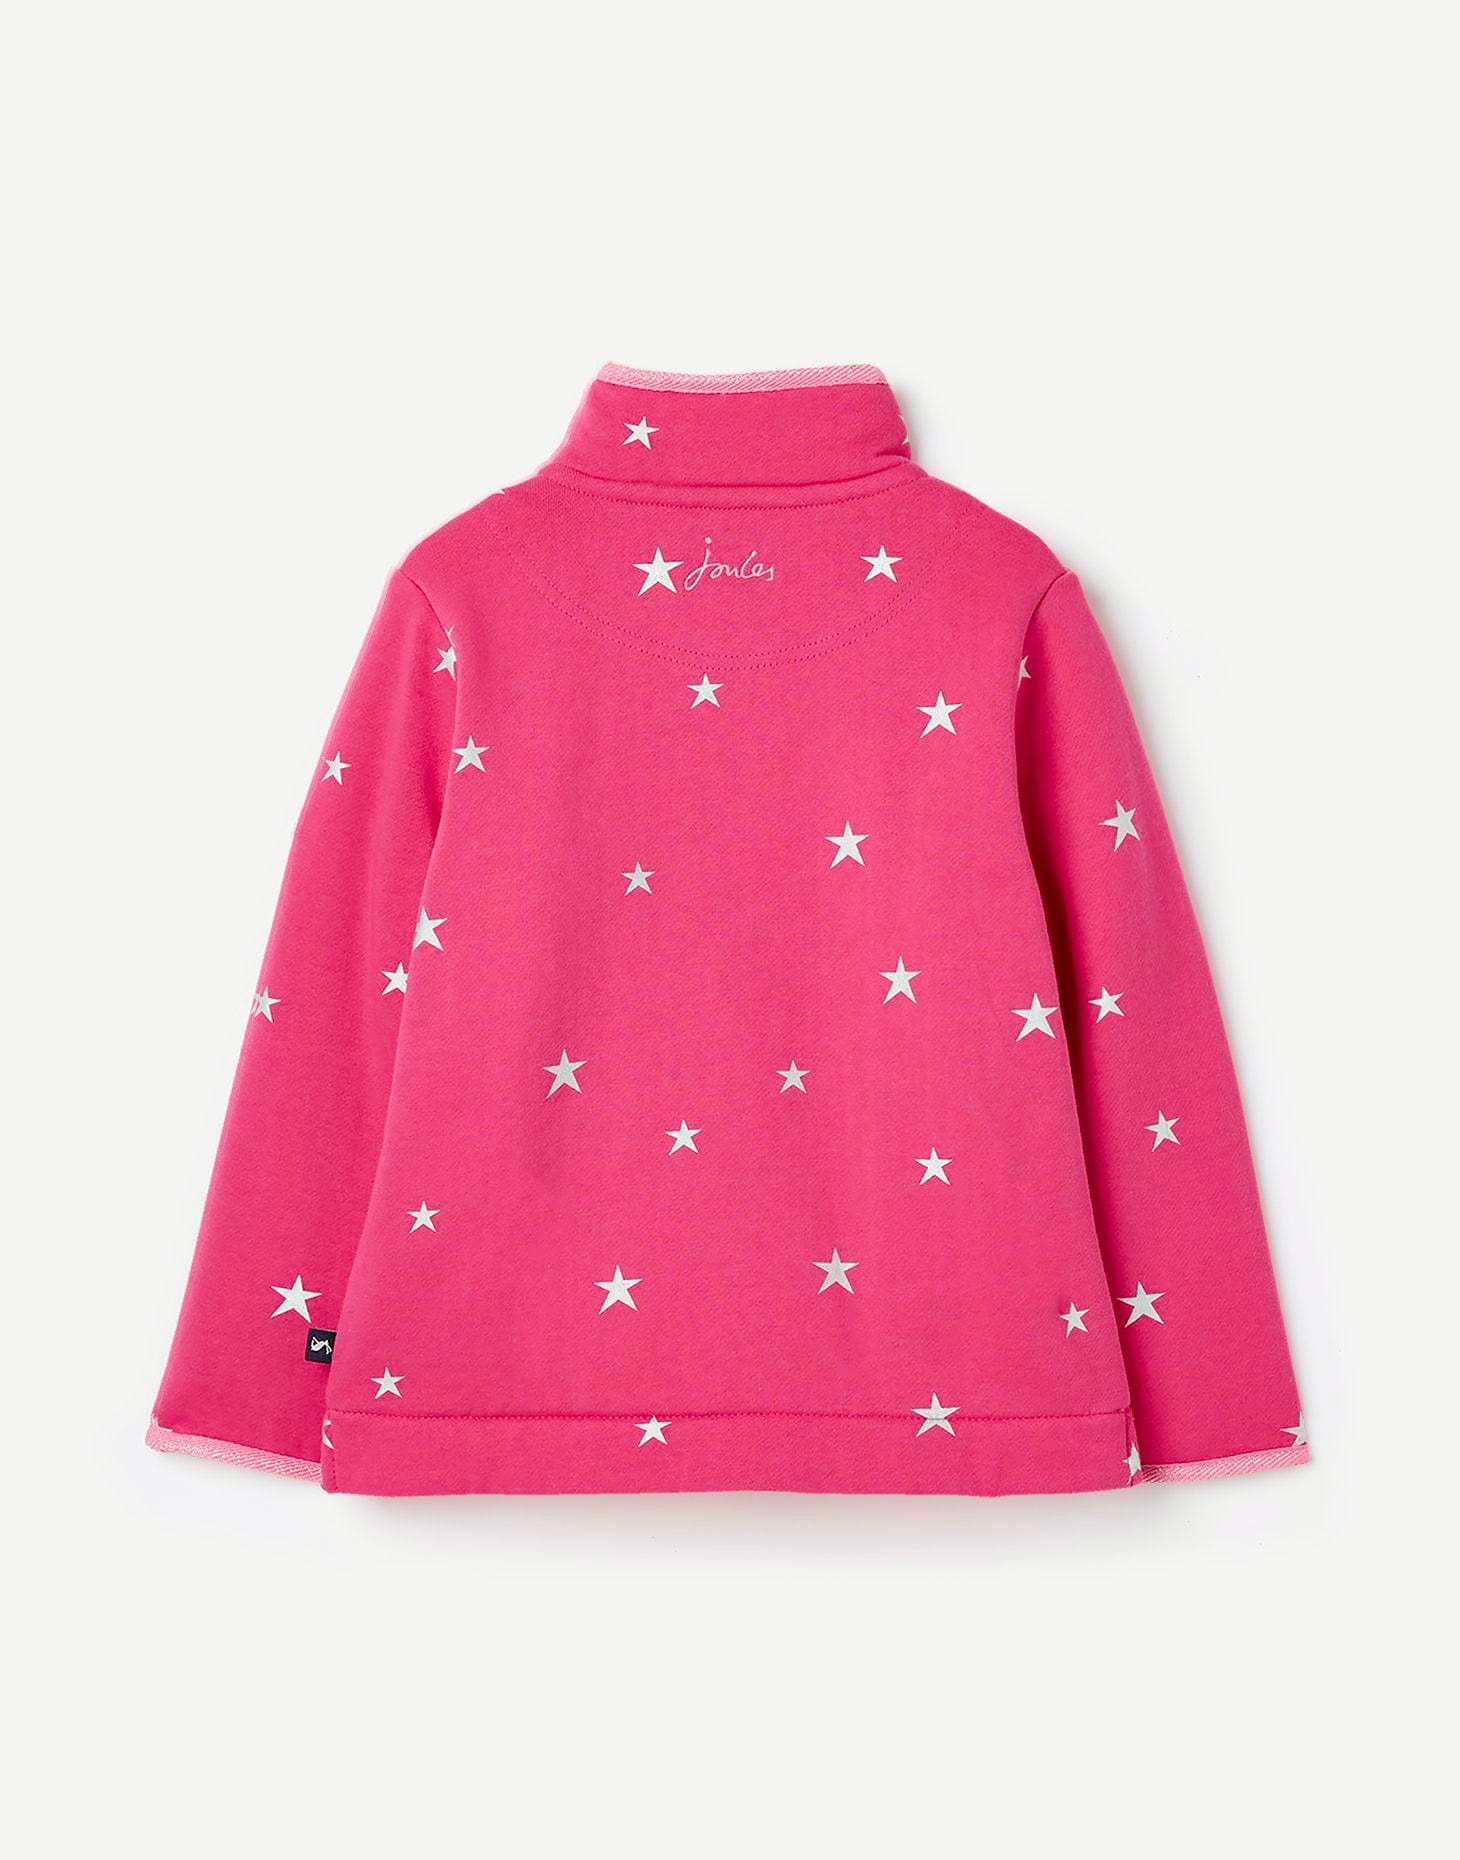 Joules Fairdale Fleece Lined Sweatshirt - Pink Stars